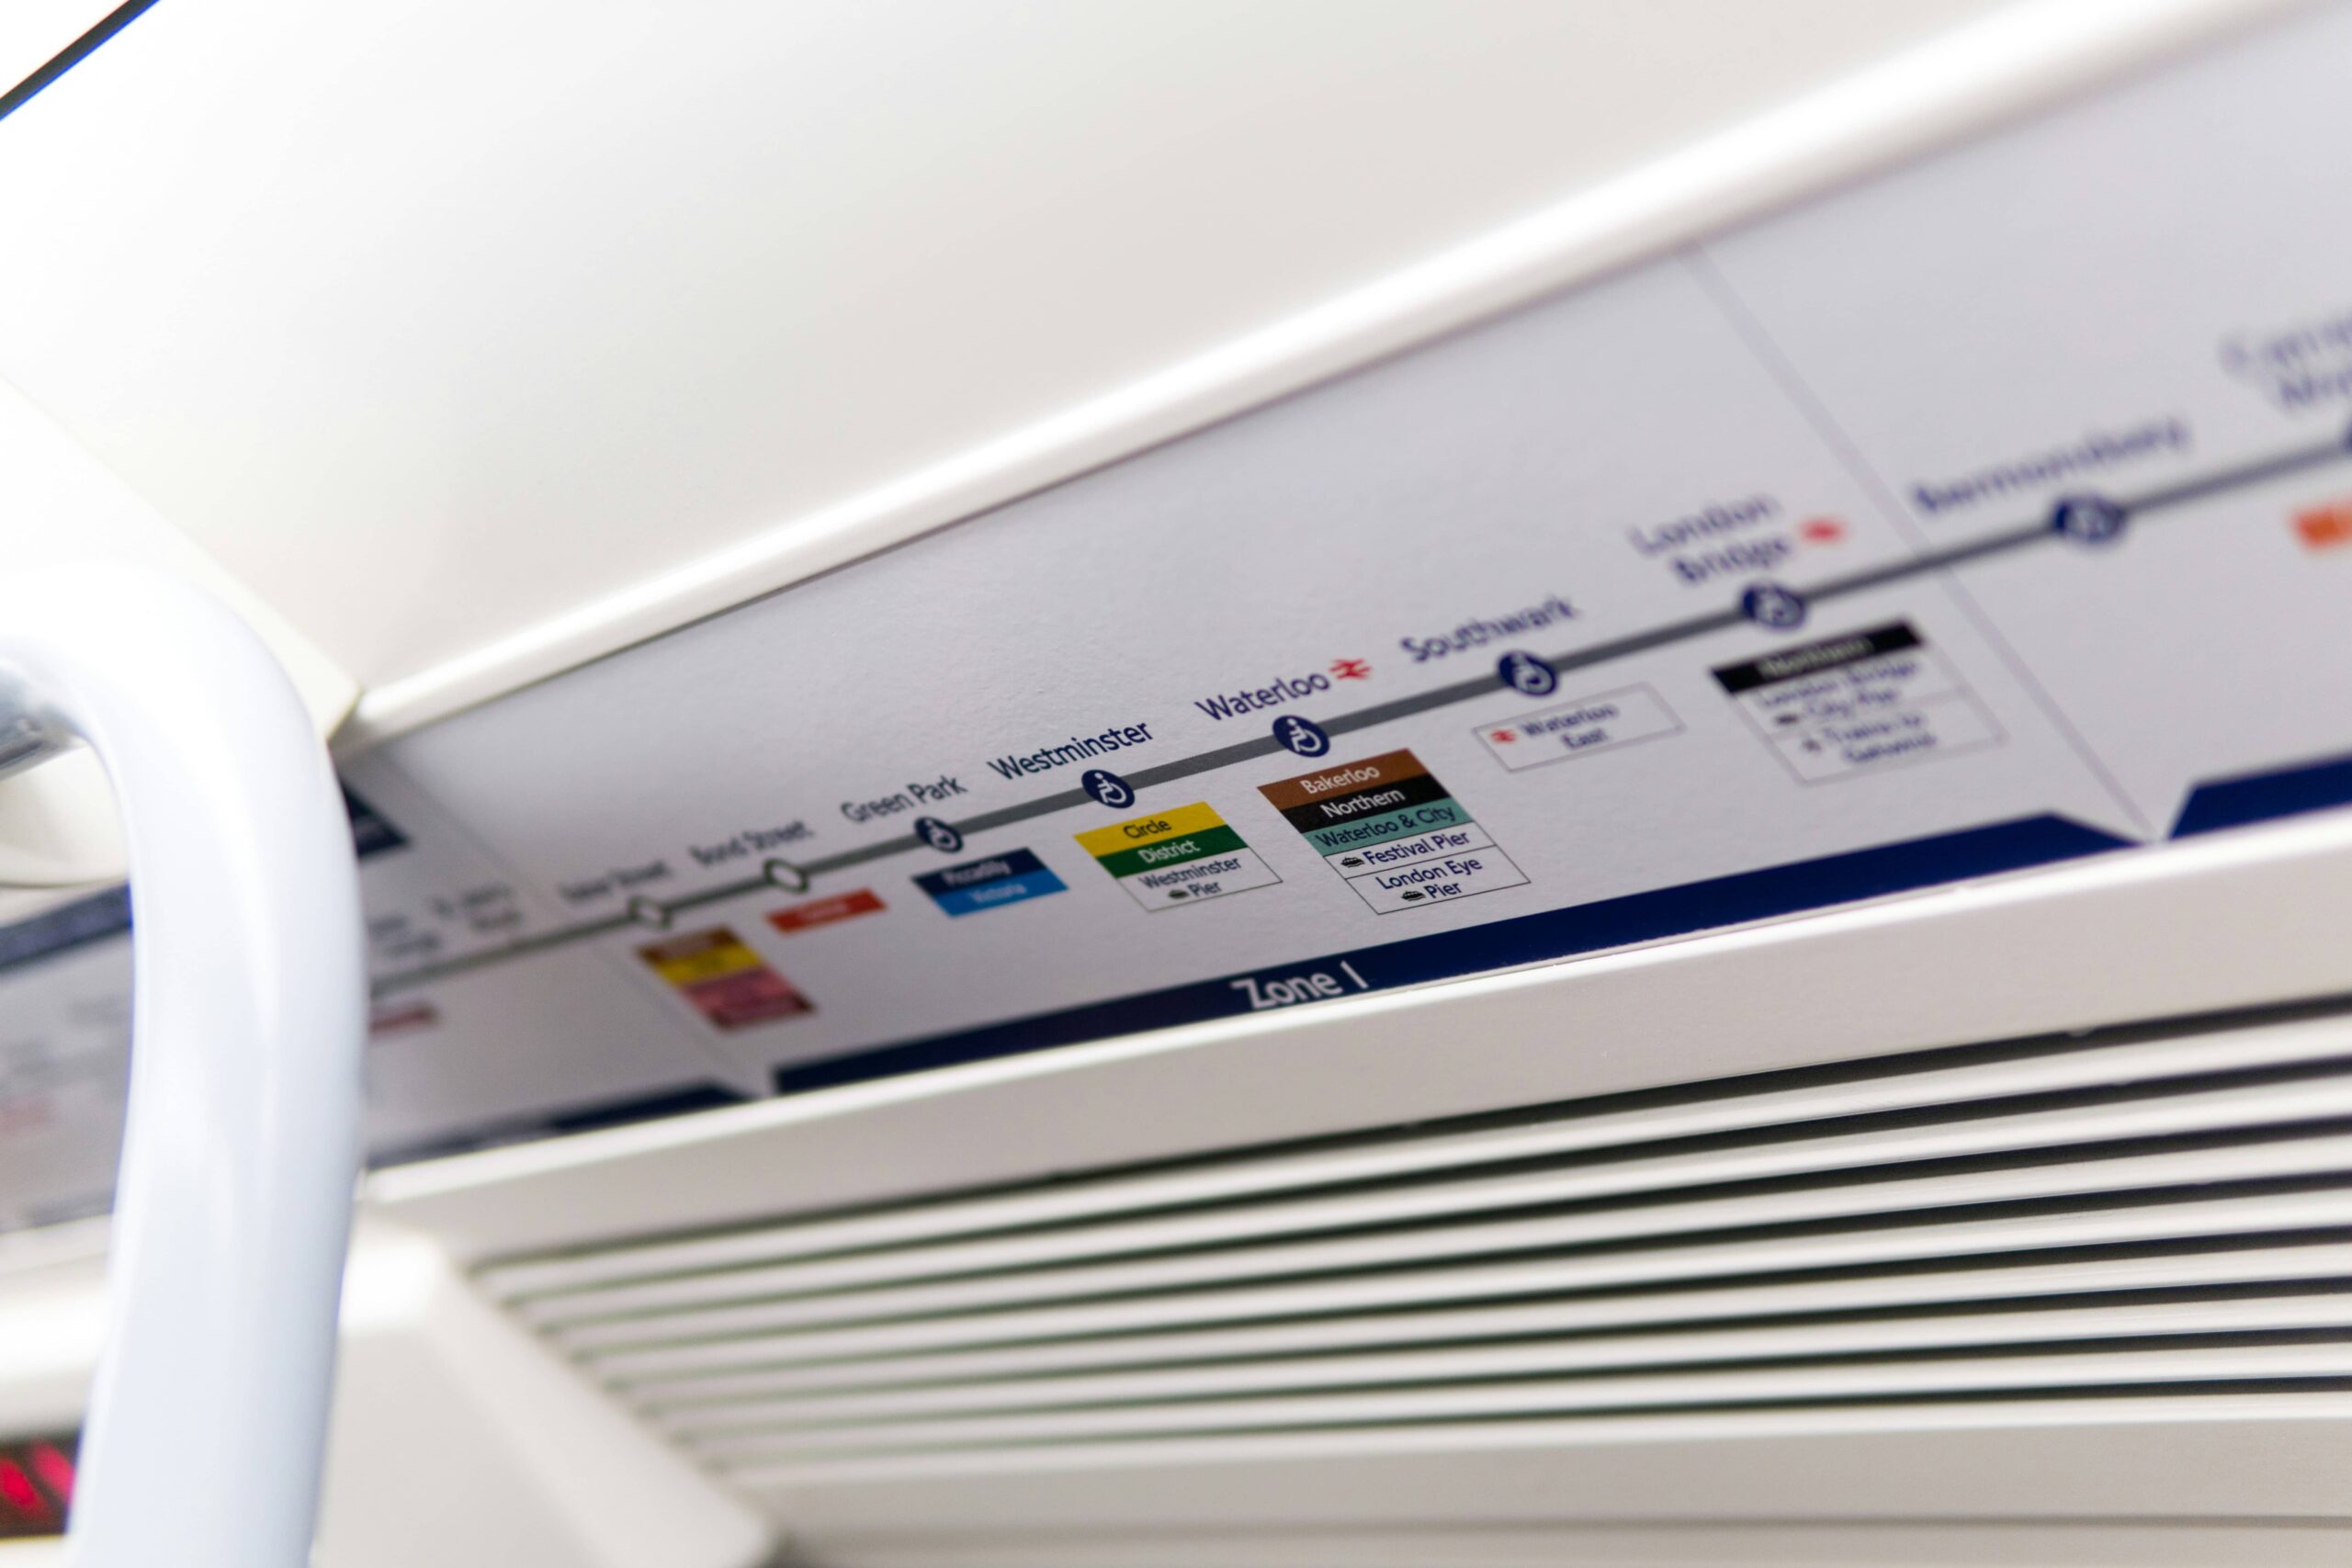 AC system develops a refrigerant leak